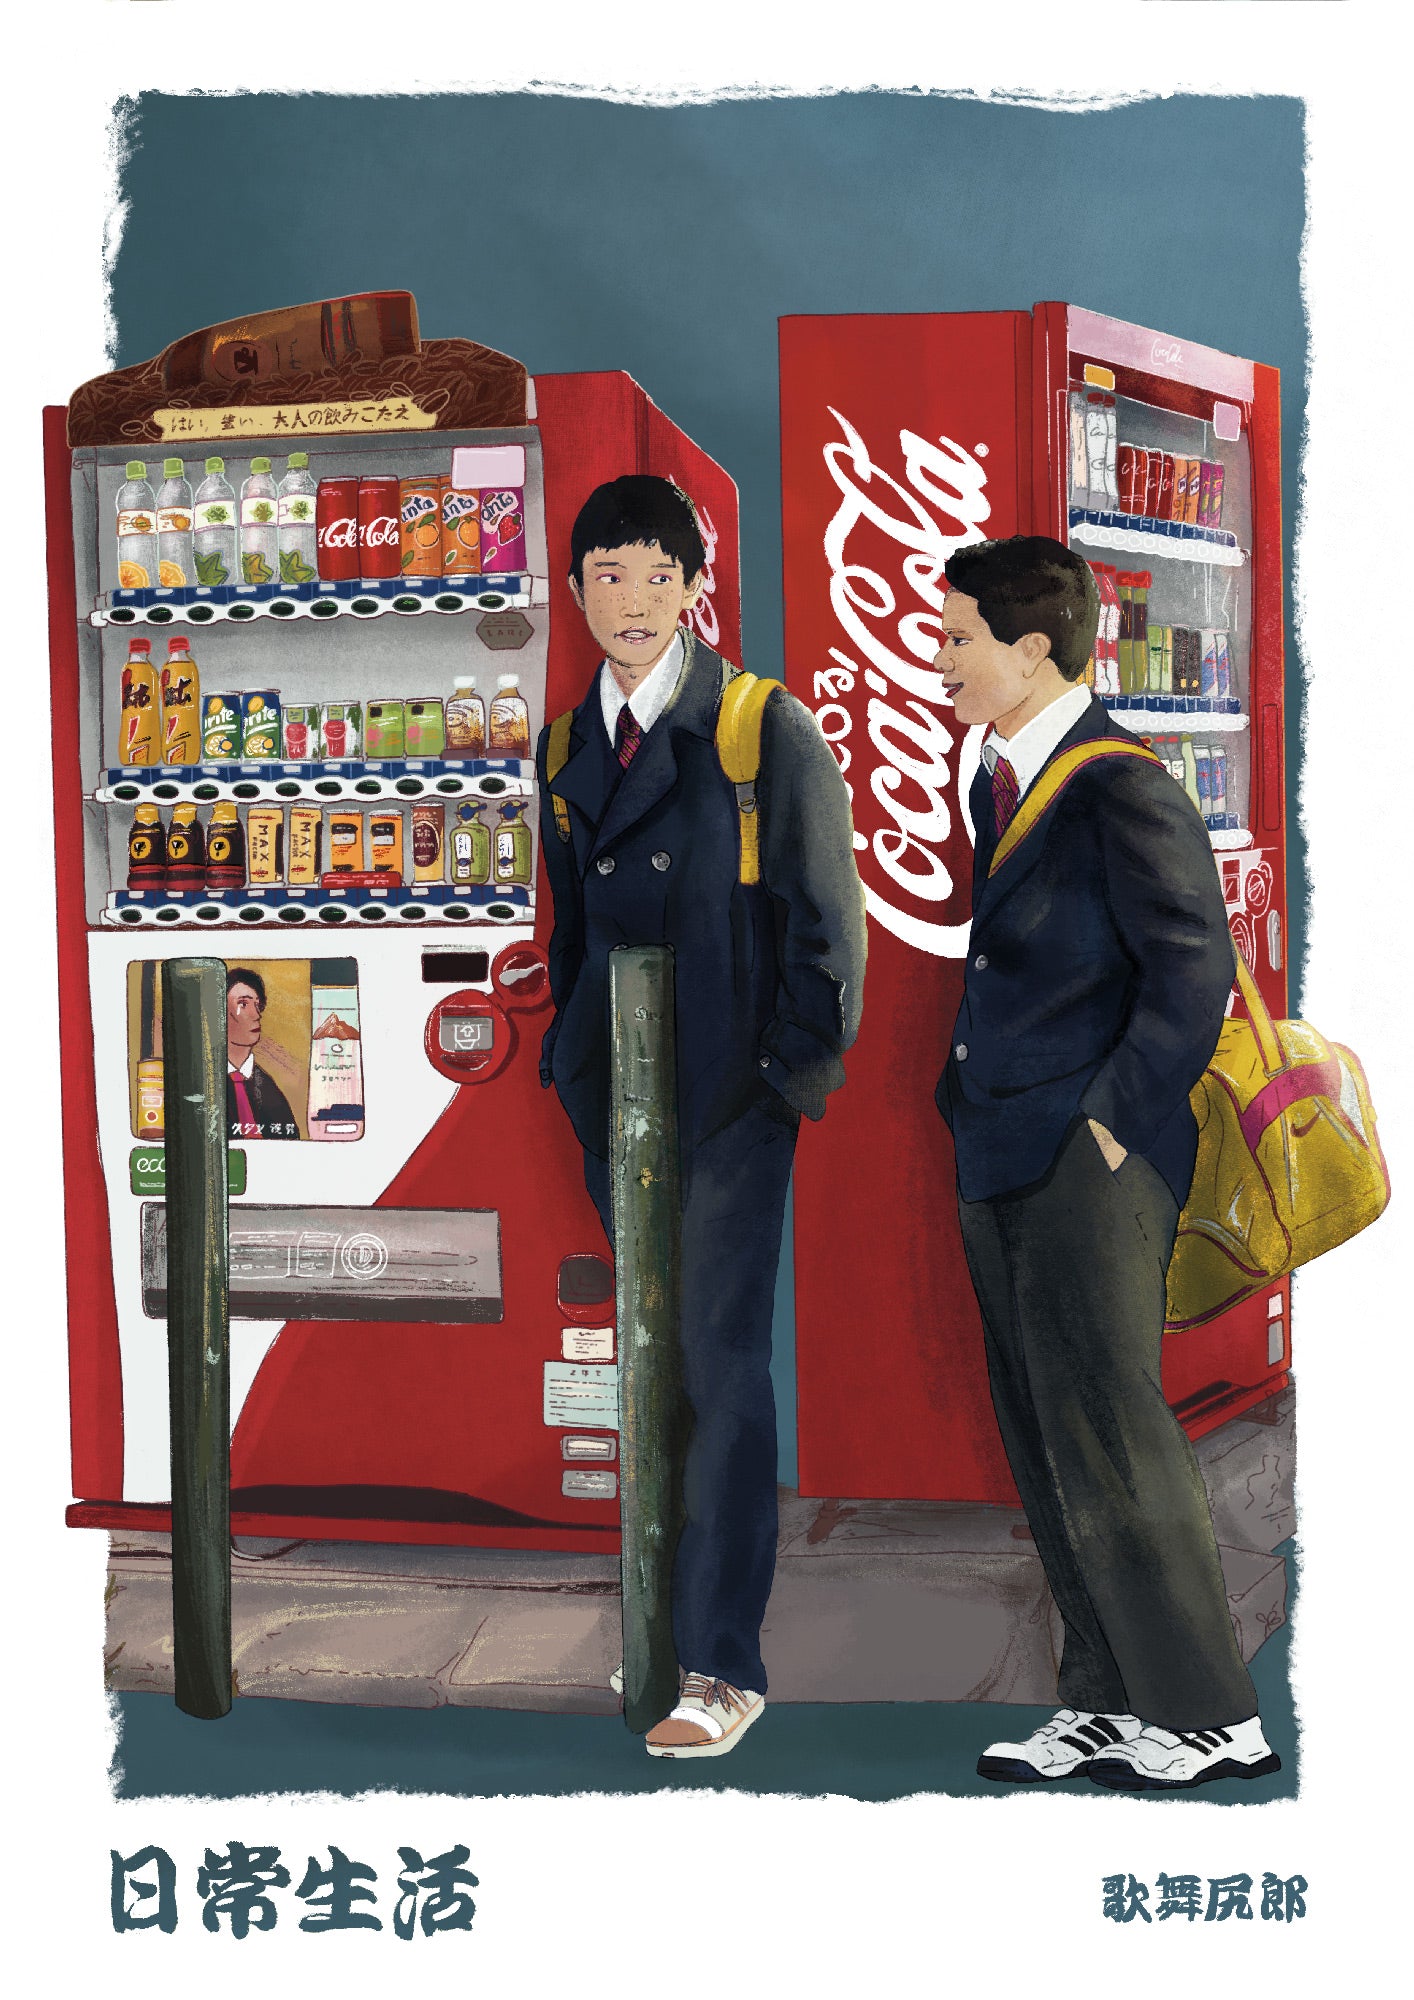 School Boys – Vending Machine Postcard